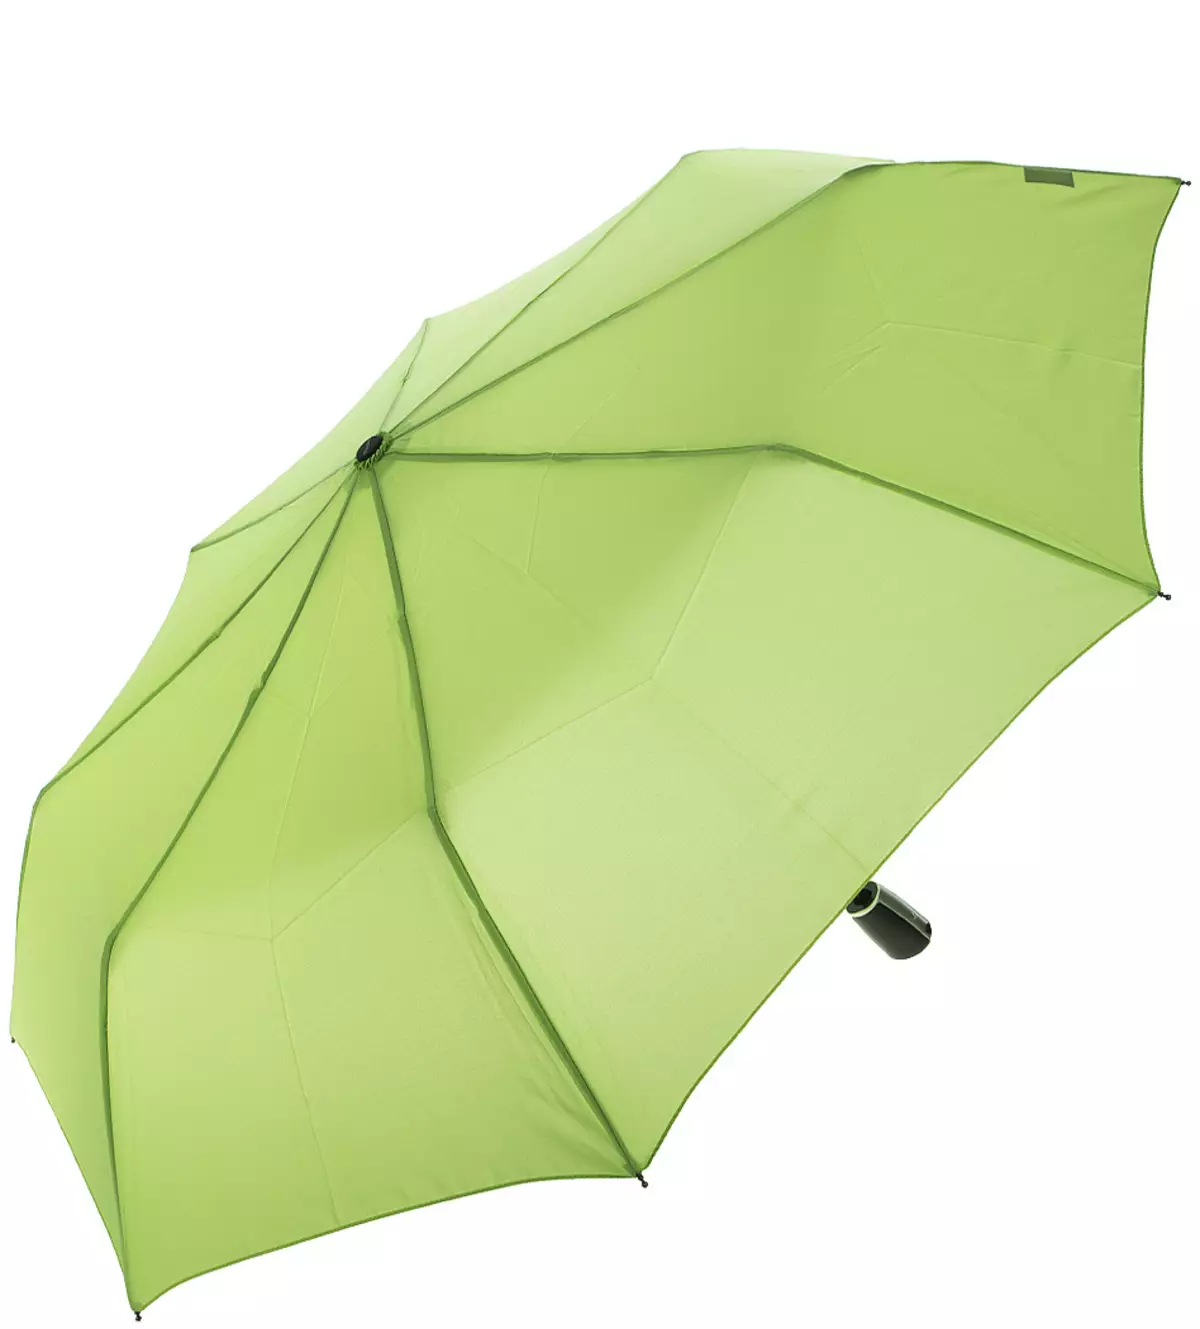 Doppler Umbrellas (60 fotos): Modelos femeninos Cane y plegado, Doppler Reviews 15227_17